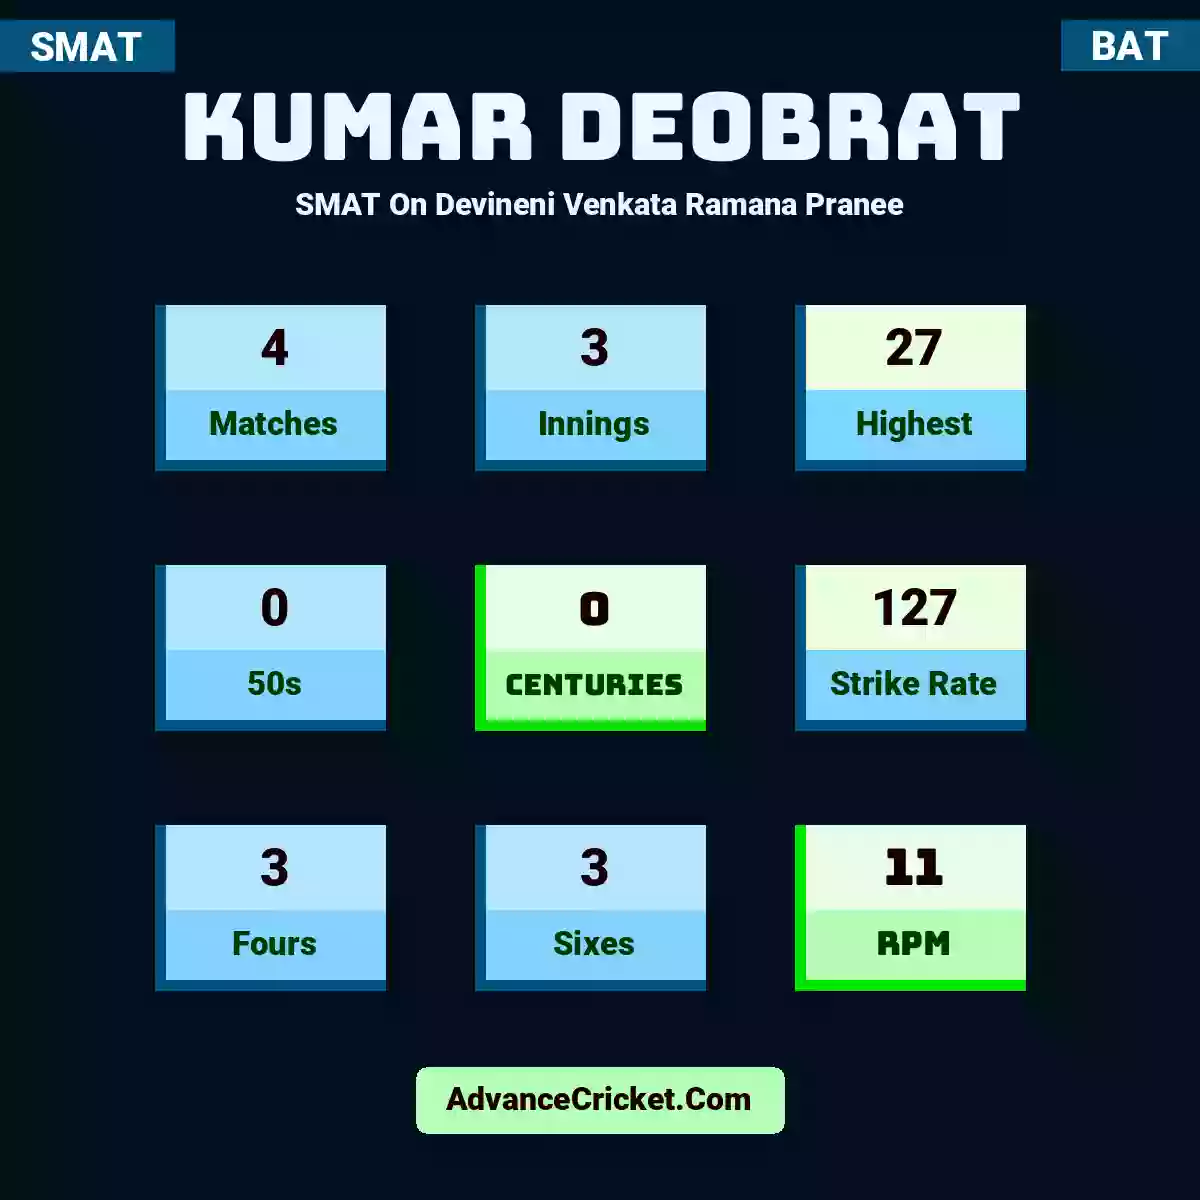 Kumar Deobrat SMAT  On Devineni Venkata Ramana Pranee, Kumar Deobrat played 4 matches, scored 27 runs as highest, 0 half-centuries, and 0 centuries, with a strike rate of 127. K.Deobrat hit 3 fours and 3 sixes, with an RPM of 11.